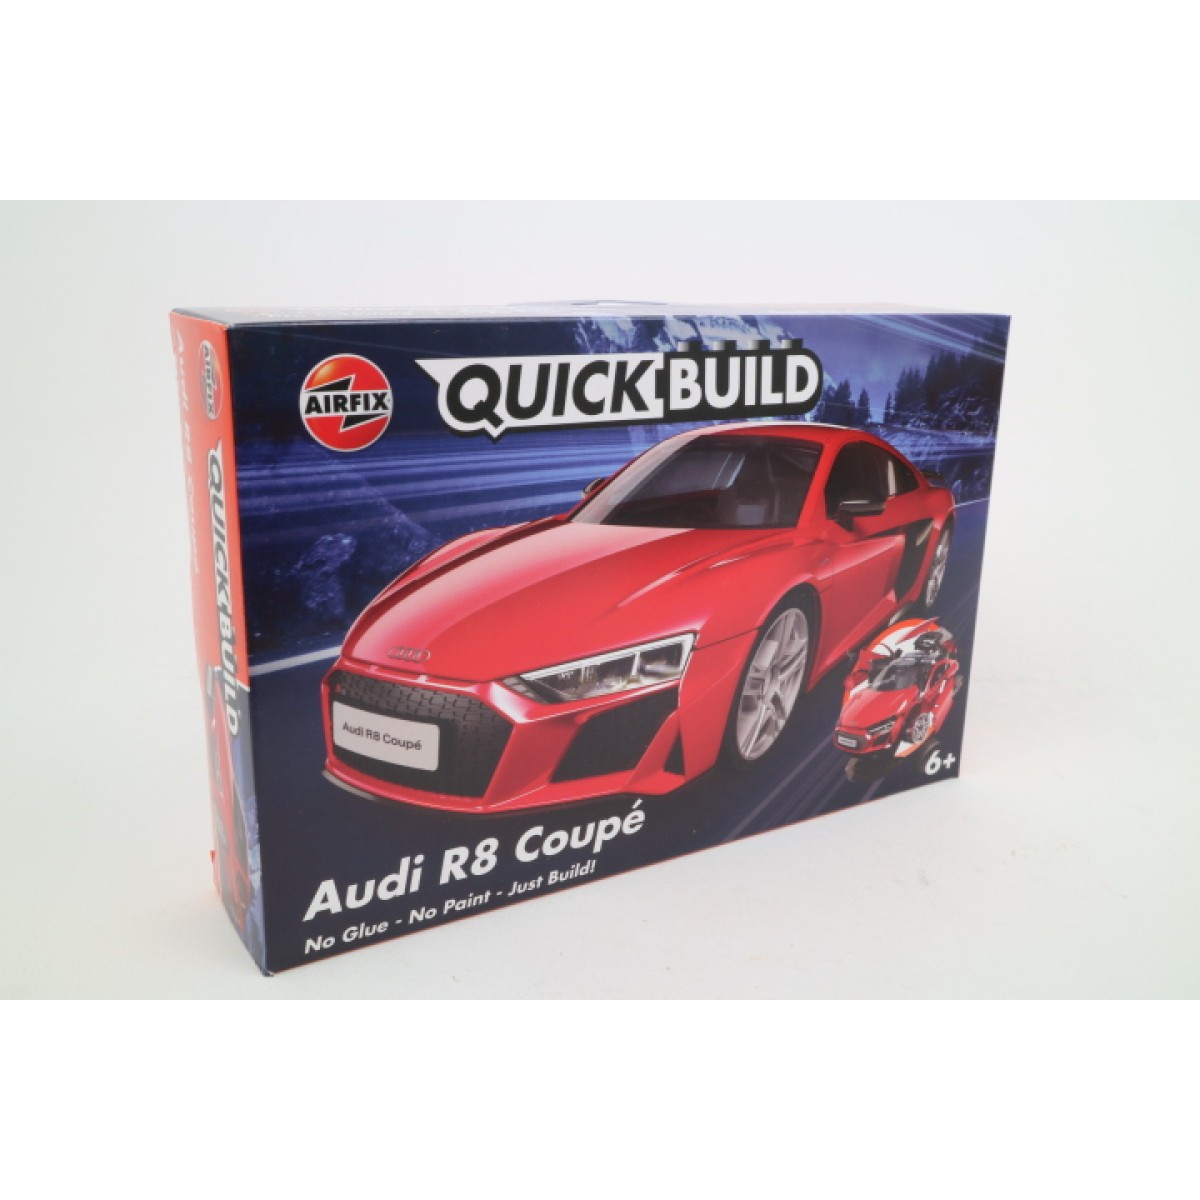 Quickbuild Audi R8 Coupe